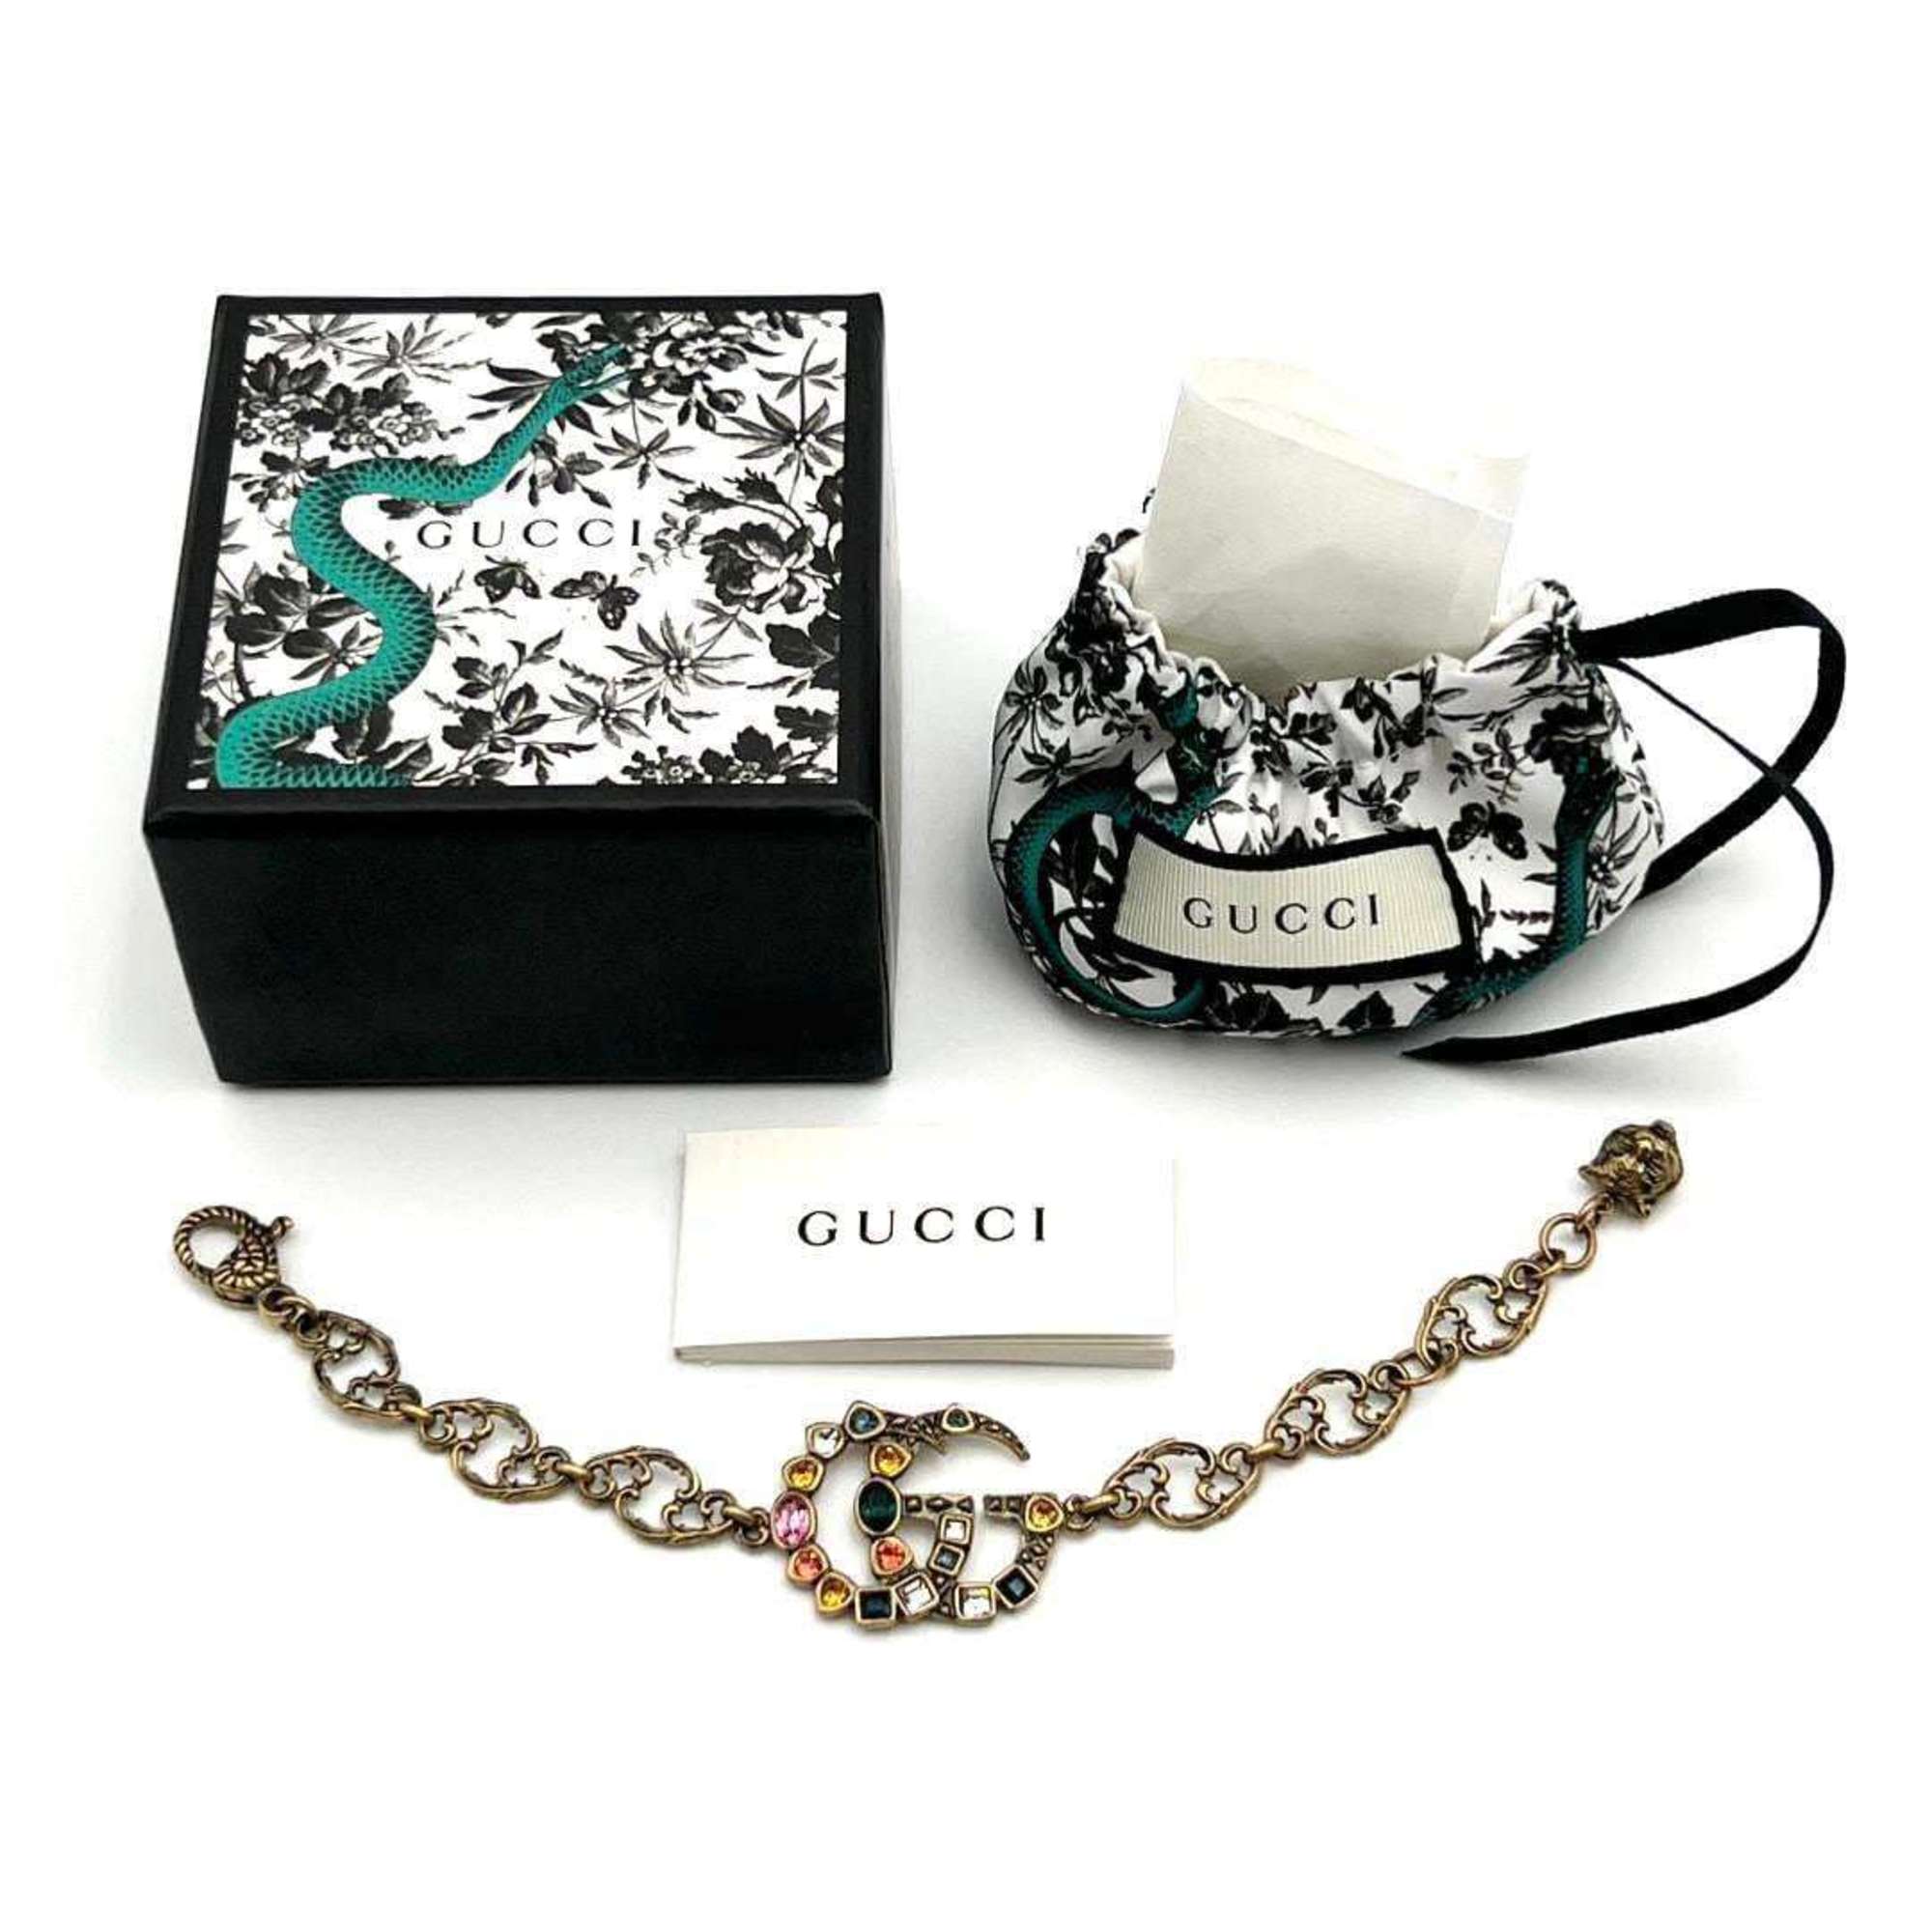 GUCCI Women's Double G Multicolor Crystal Bracelet Bangle